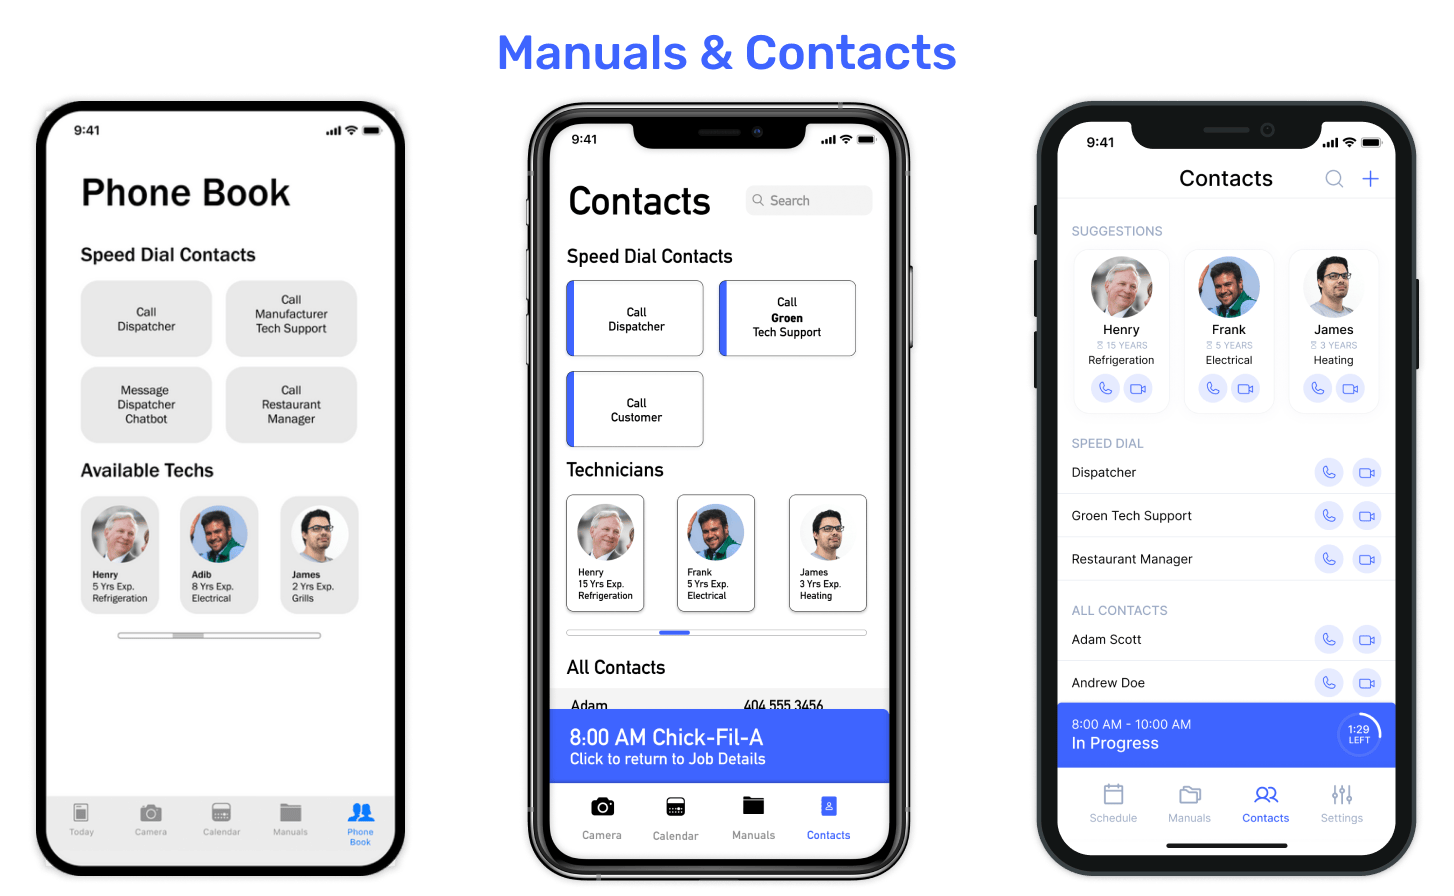 Manuals & Contacts Iterations